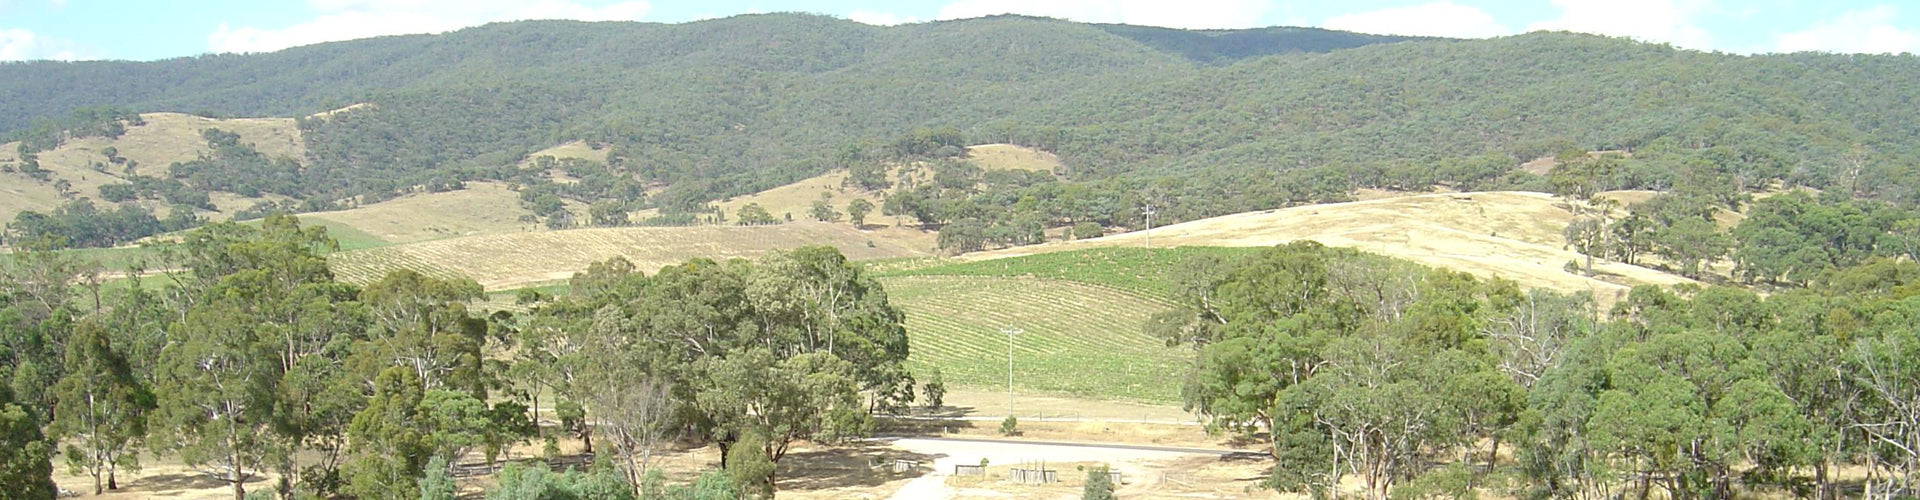 Vineyards in the Heathcote Region of Victoria